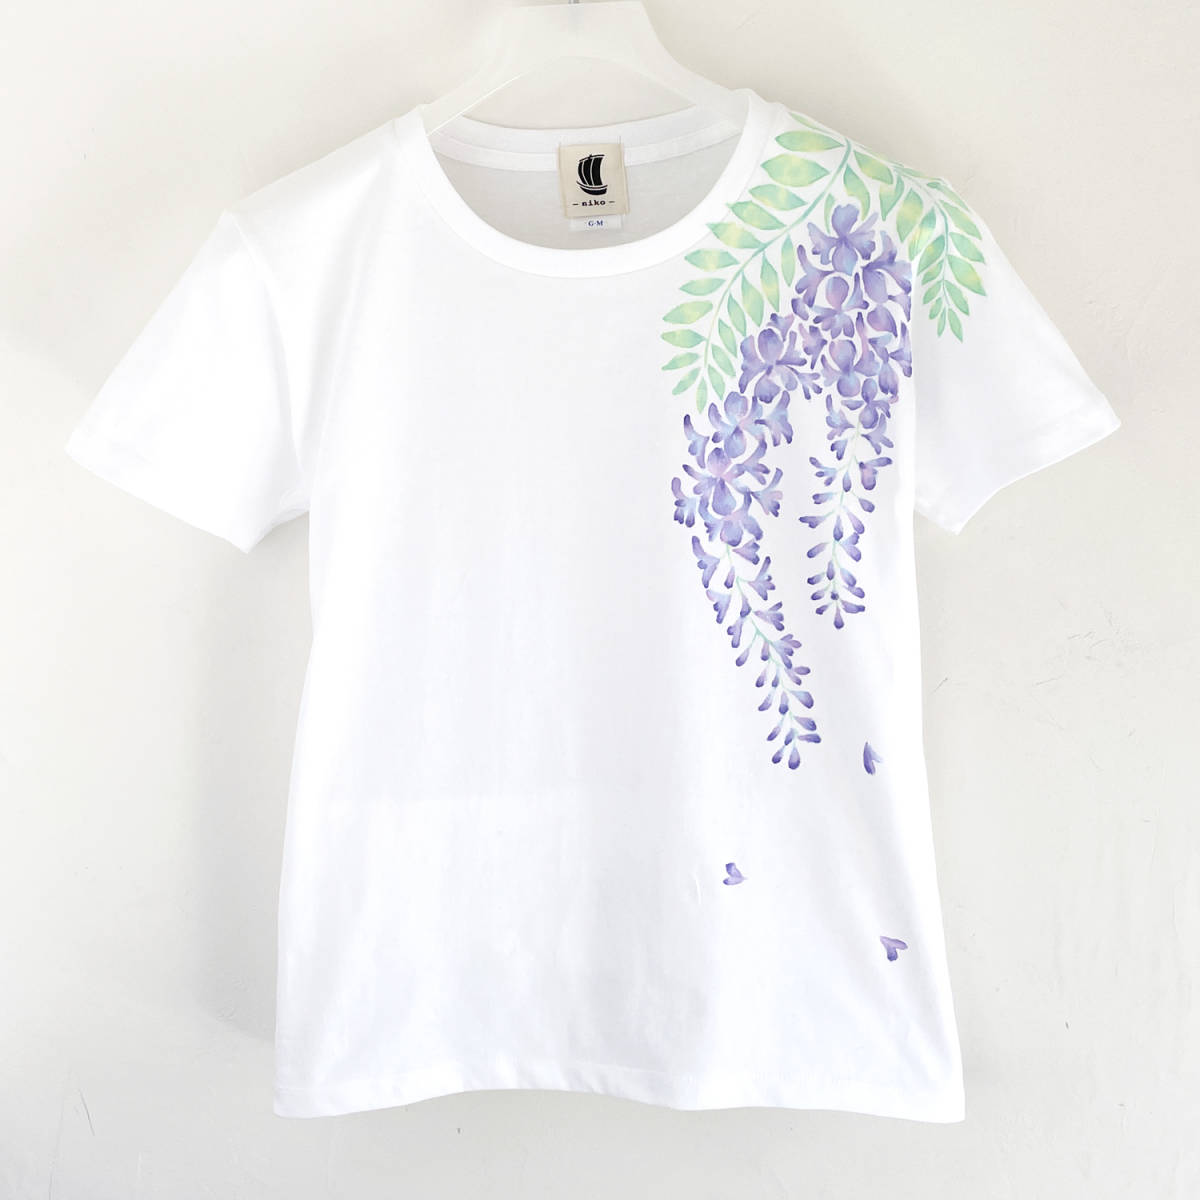 Women's T-shirt, size M, white, wisteria flower pattern T-shirt, handmade, hand-painted T-shirt, Medium size, Crew neck, Patterned